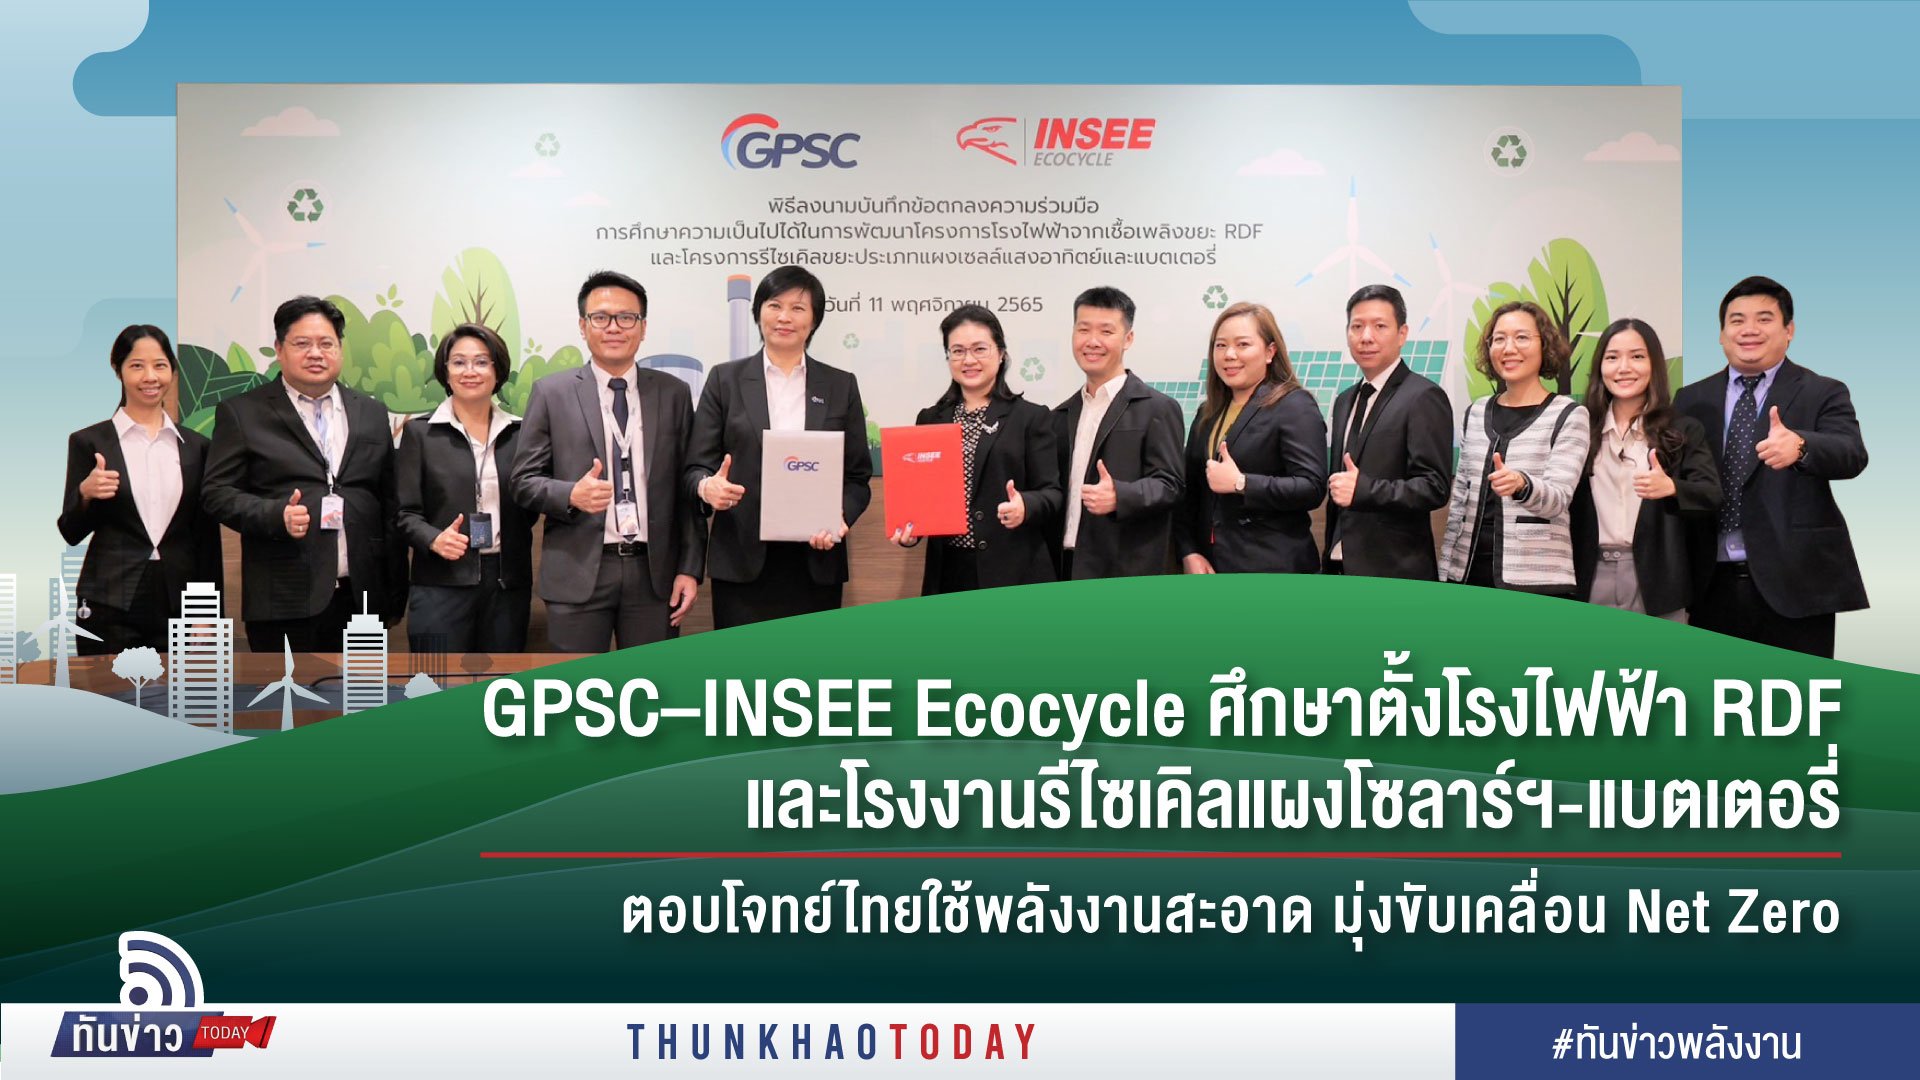 GPSC–INSEE Ecocycle ศึกษาตั้งโรงไฟฟ้า RDF และโรงงานรีไซเคิลแผงโซลาร์ฯ-แบตเตอรี่  ตอบโจทย์ไทยใช้พลังงานสะอาด มุ่งขับเคลื่อน Net Zero